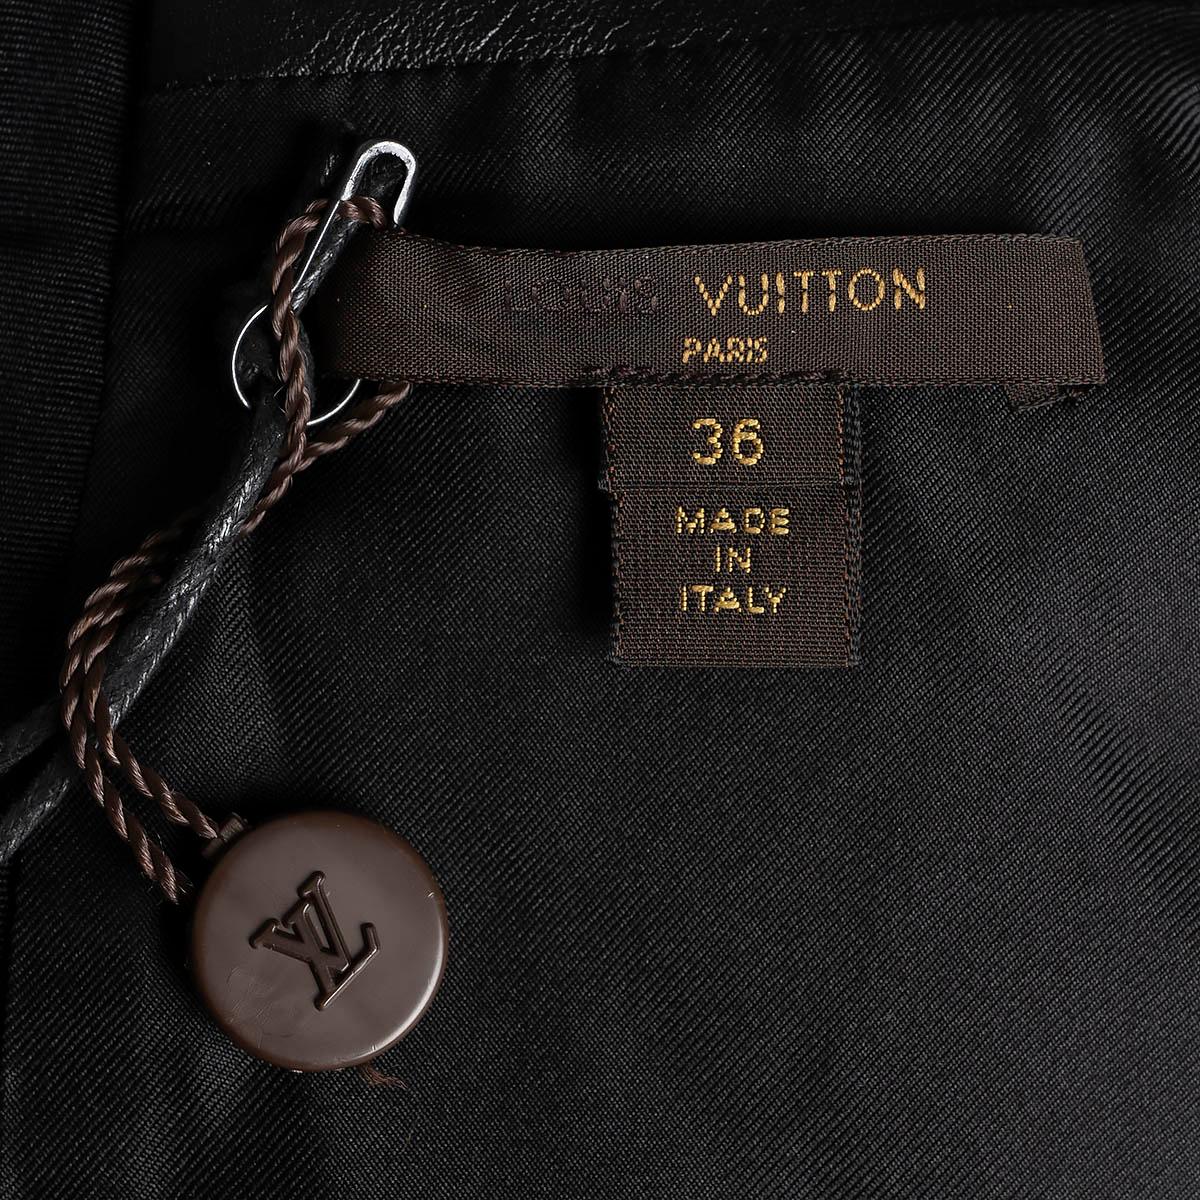 LOUIS VUITTON black & white wool LEATHER TRIM CHECK Shirt 36 XS For Sale 4